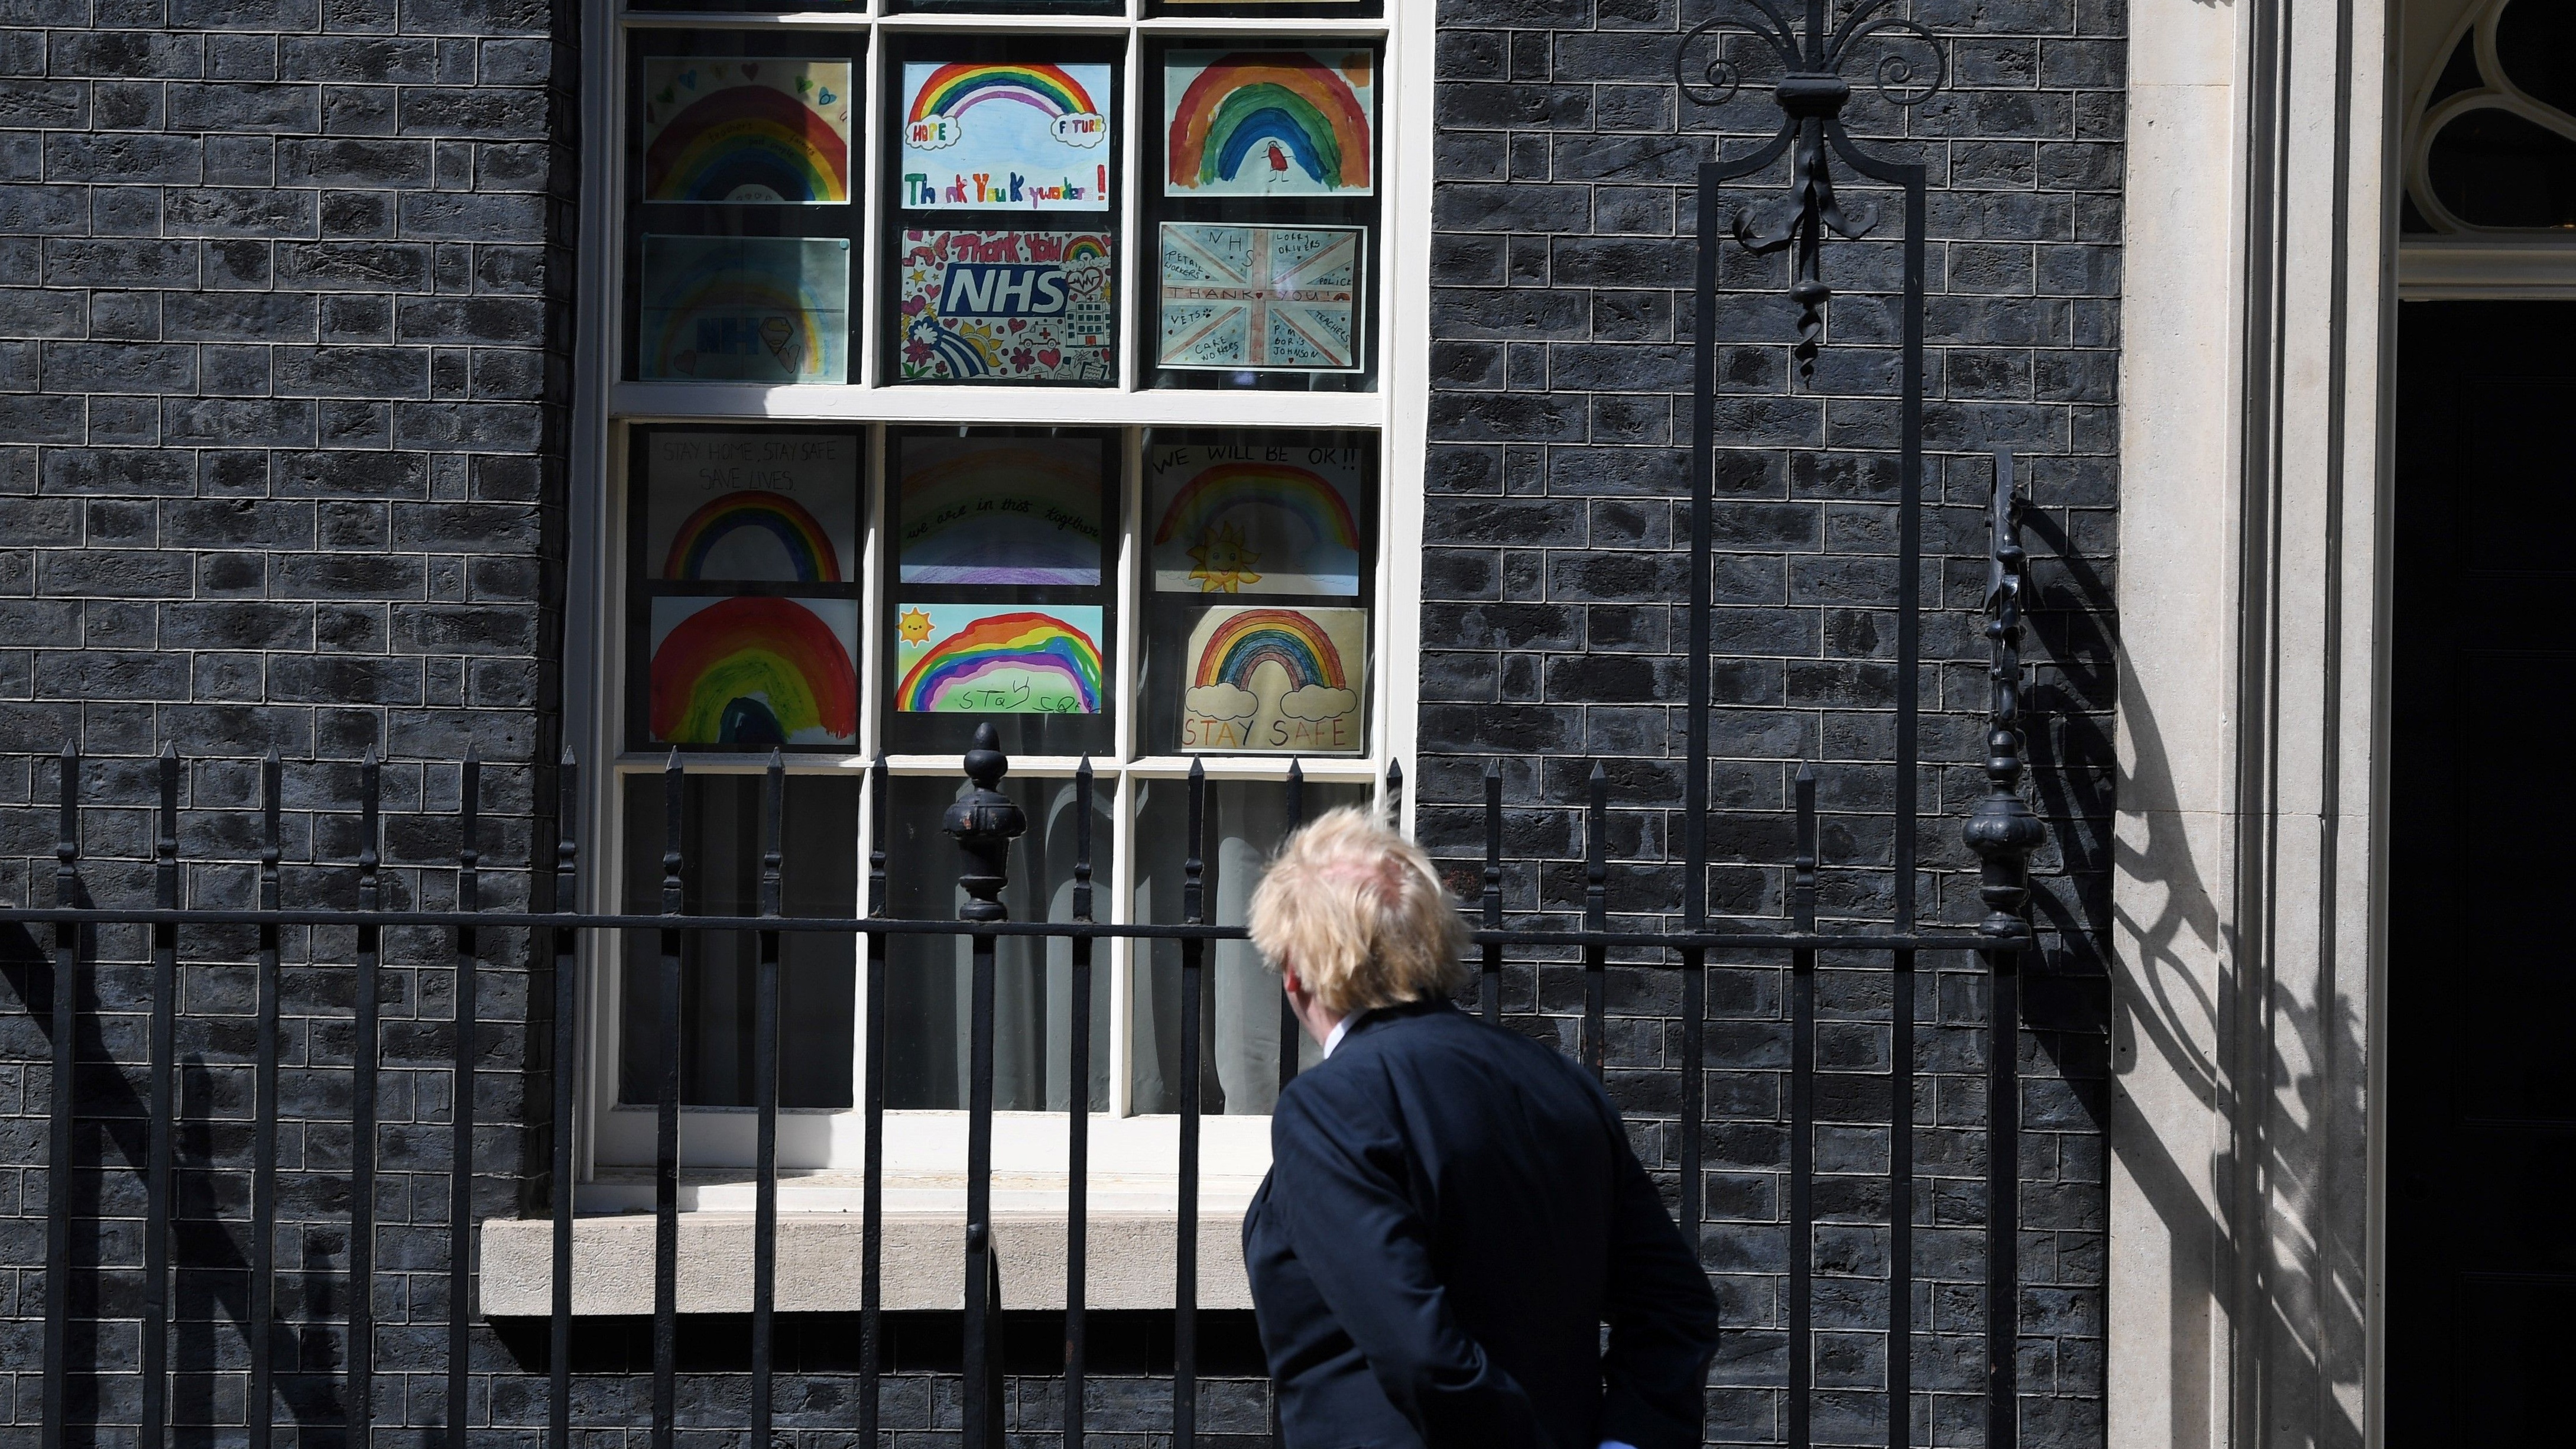 Boris Johnson outside 10 Downing Street